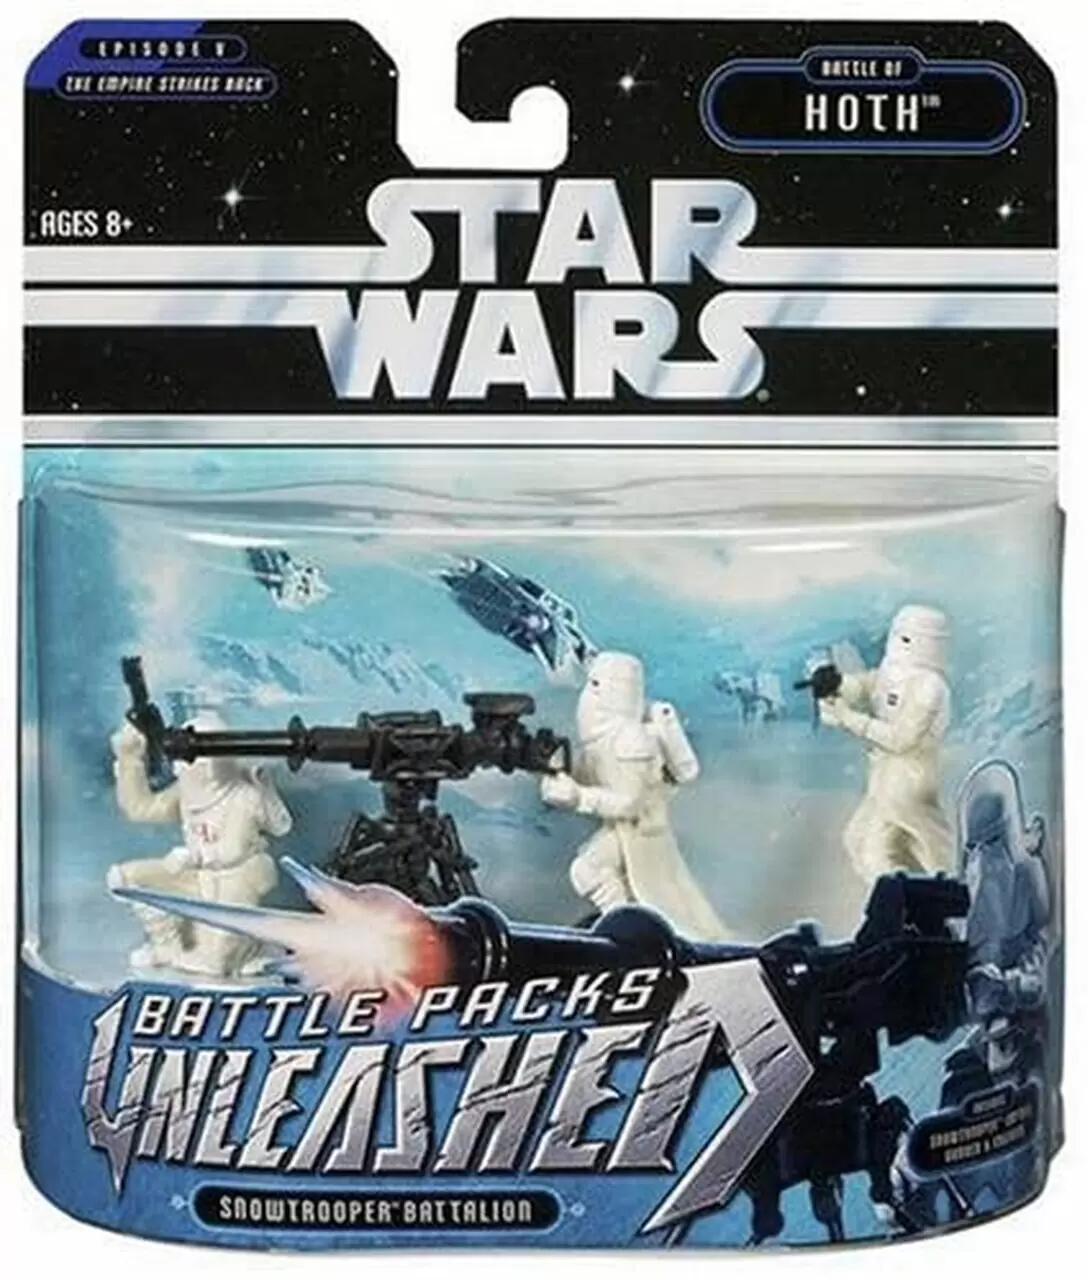 Star Wars Unleashed - Snowtrooper Battalion